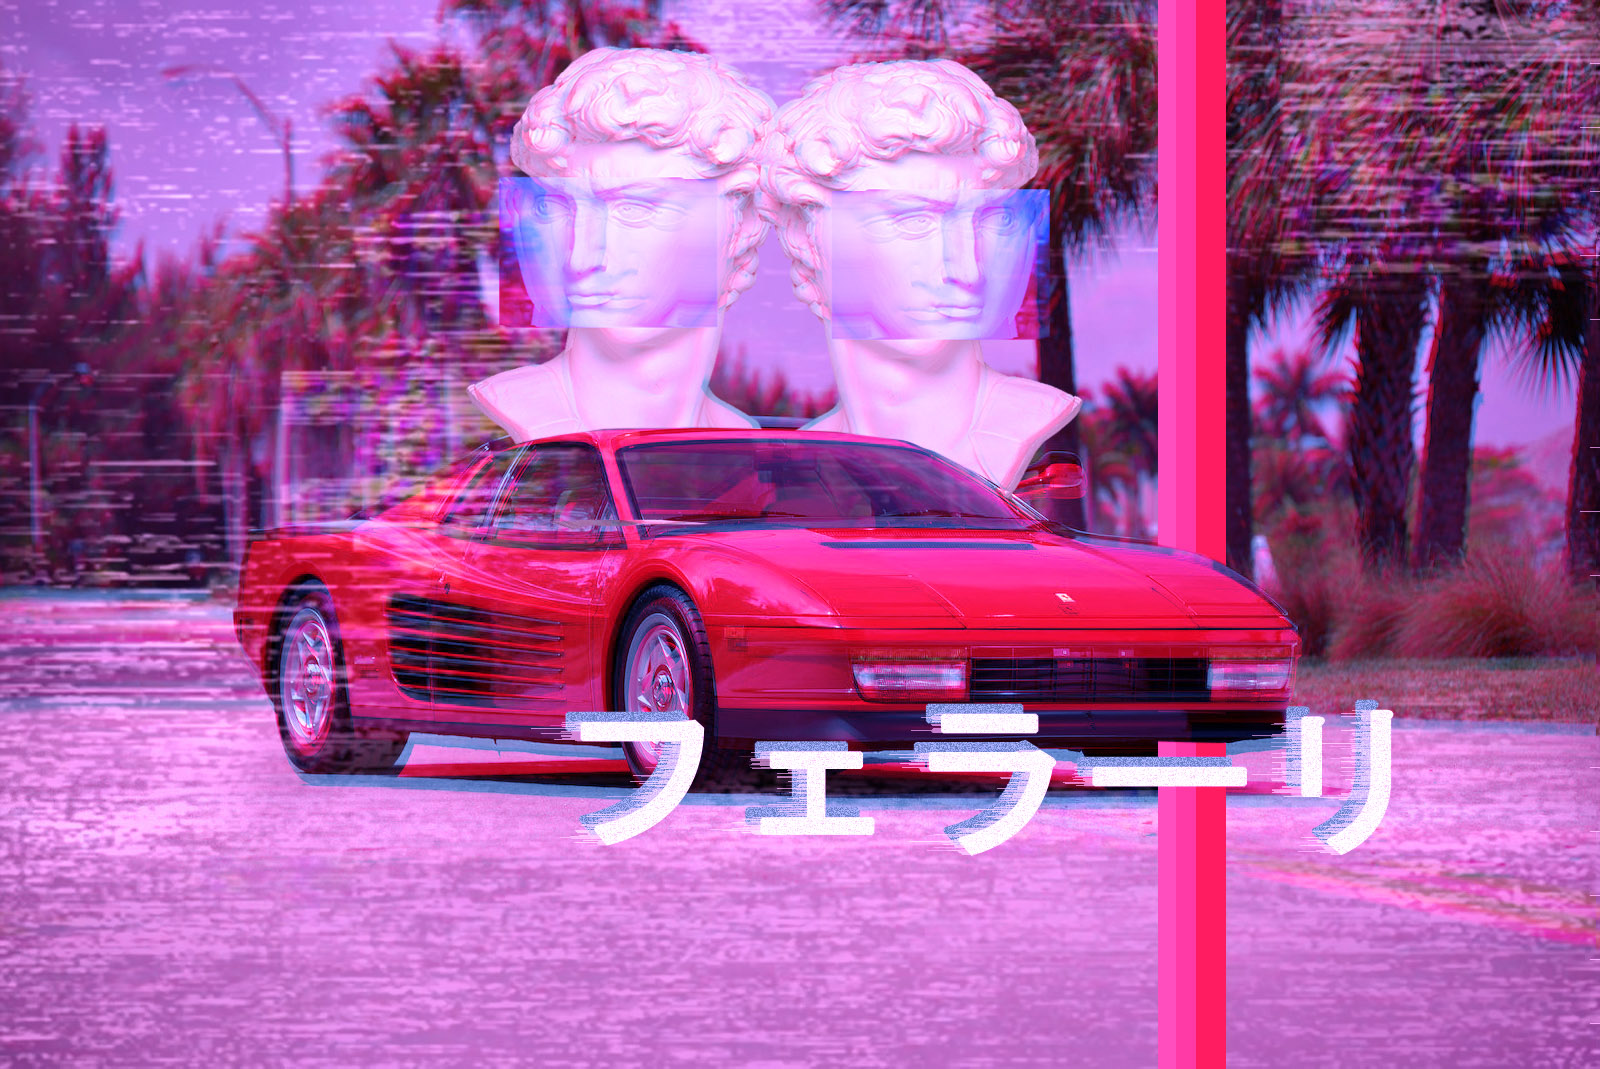 VHS 80s Vaporwave Glitch Art Digital Art Car Vehicle Ferrari Pink 1600x1069